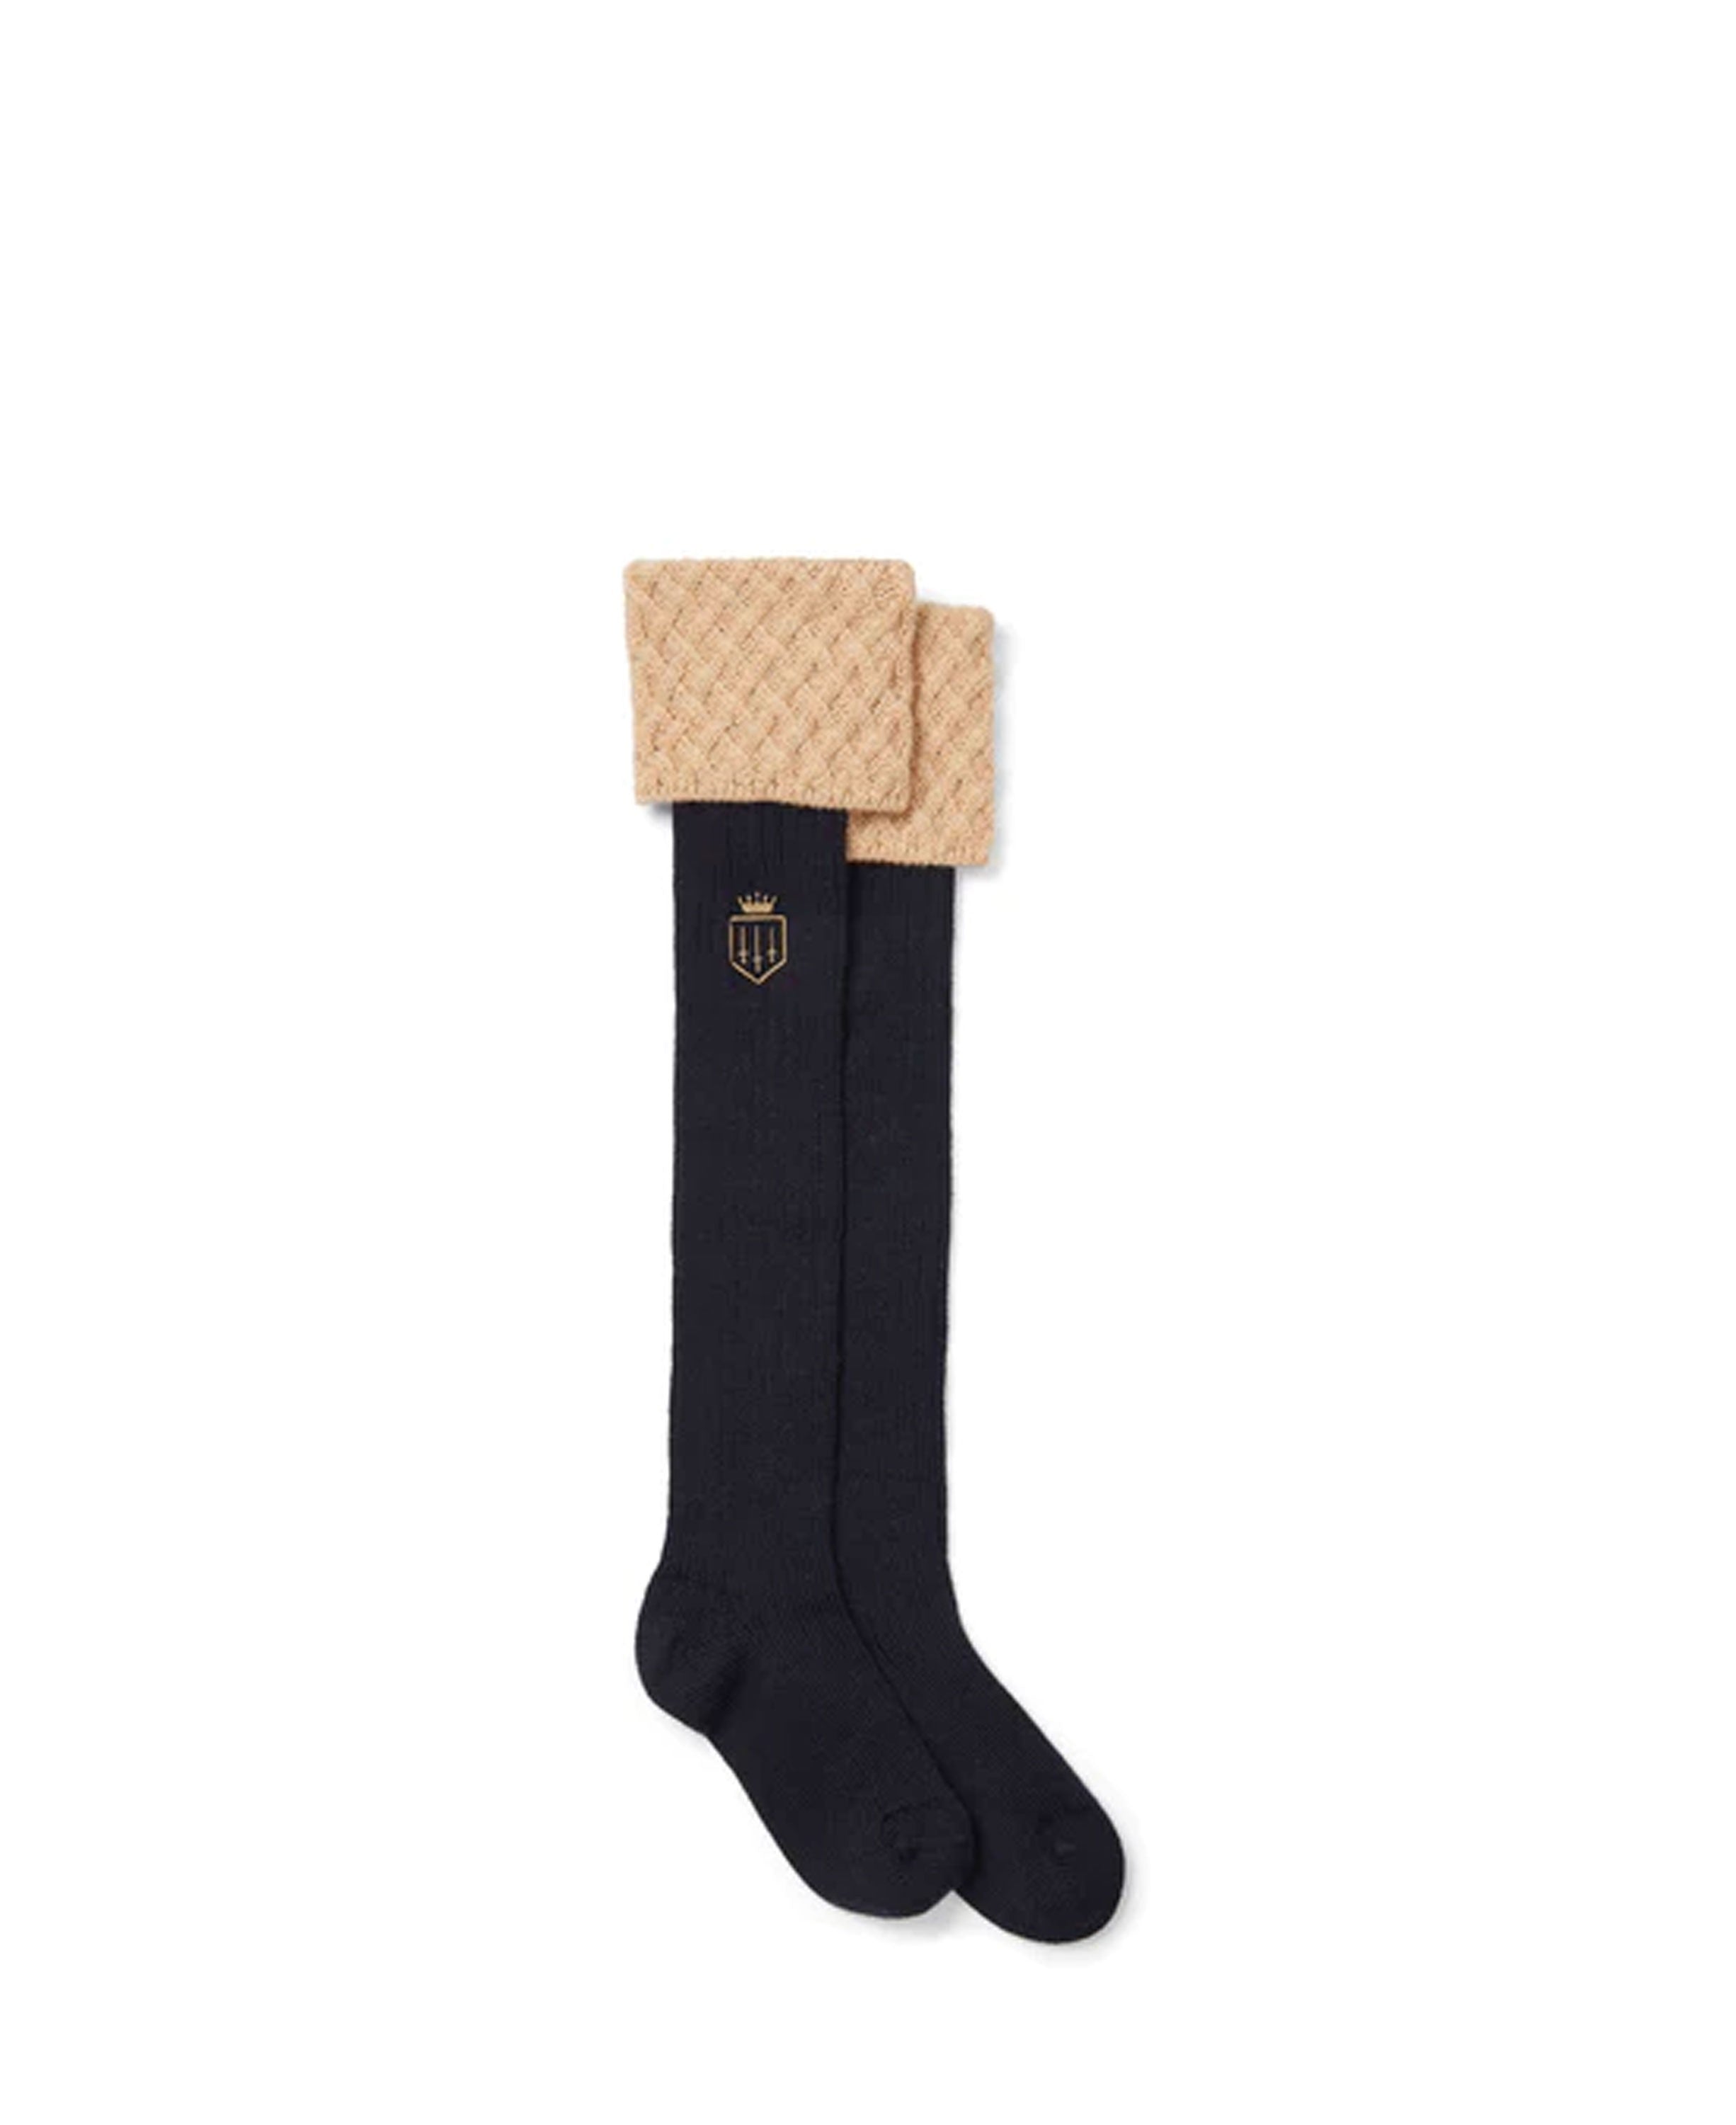 Explorer Merino Wool Socks - Navy/Fawn